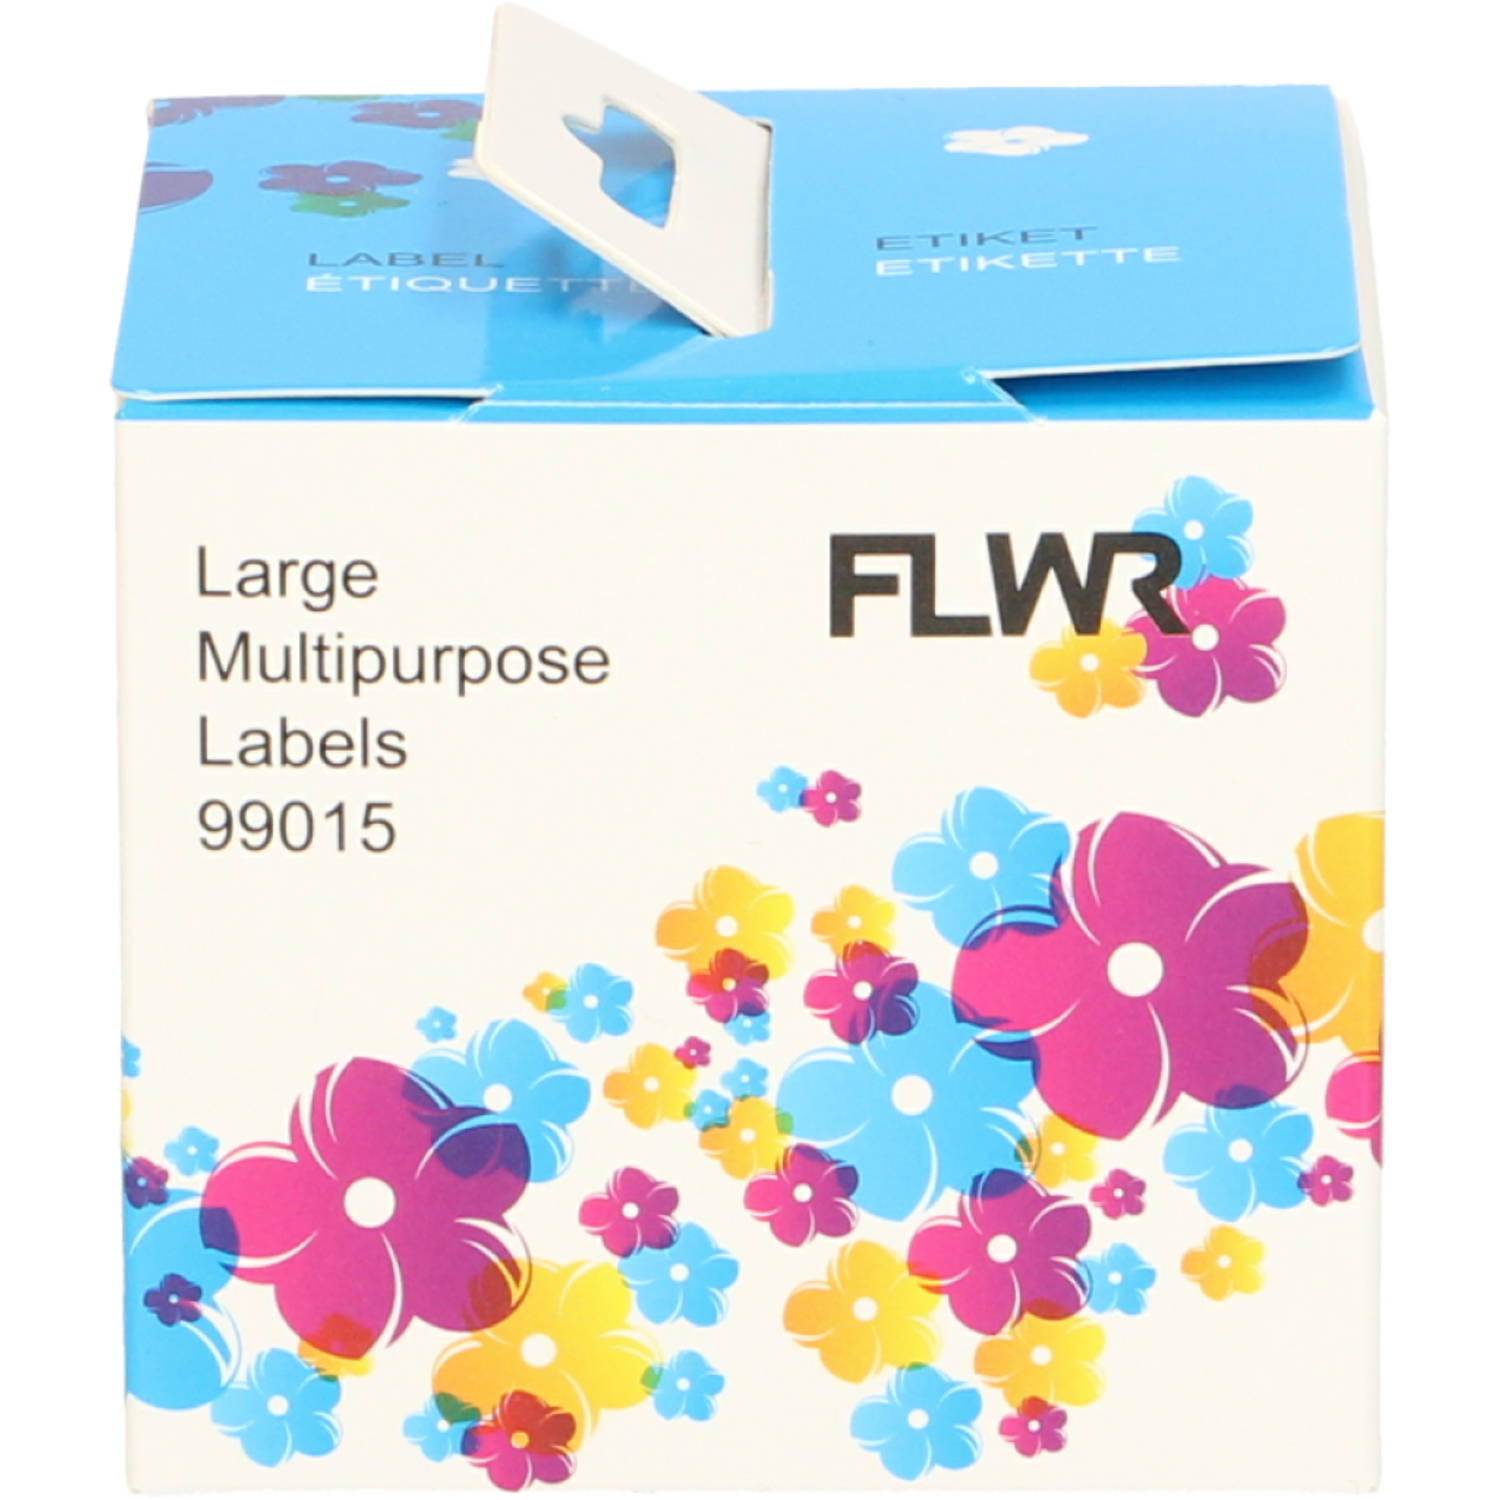 FLWR Dymo 99015 Adreslabel 54 mm x 70 mm wit labels